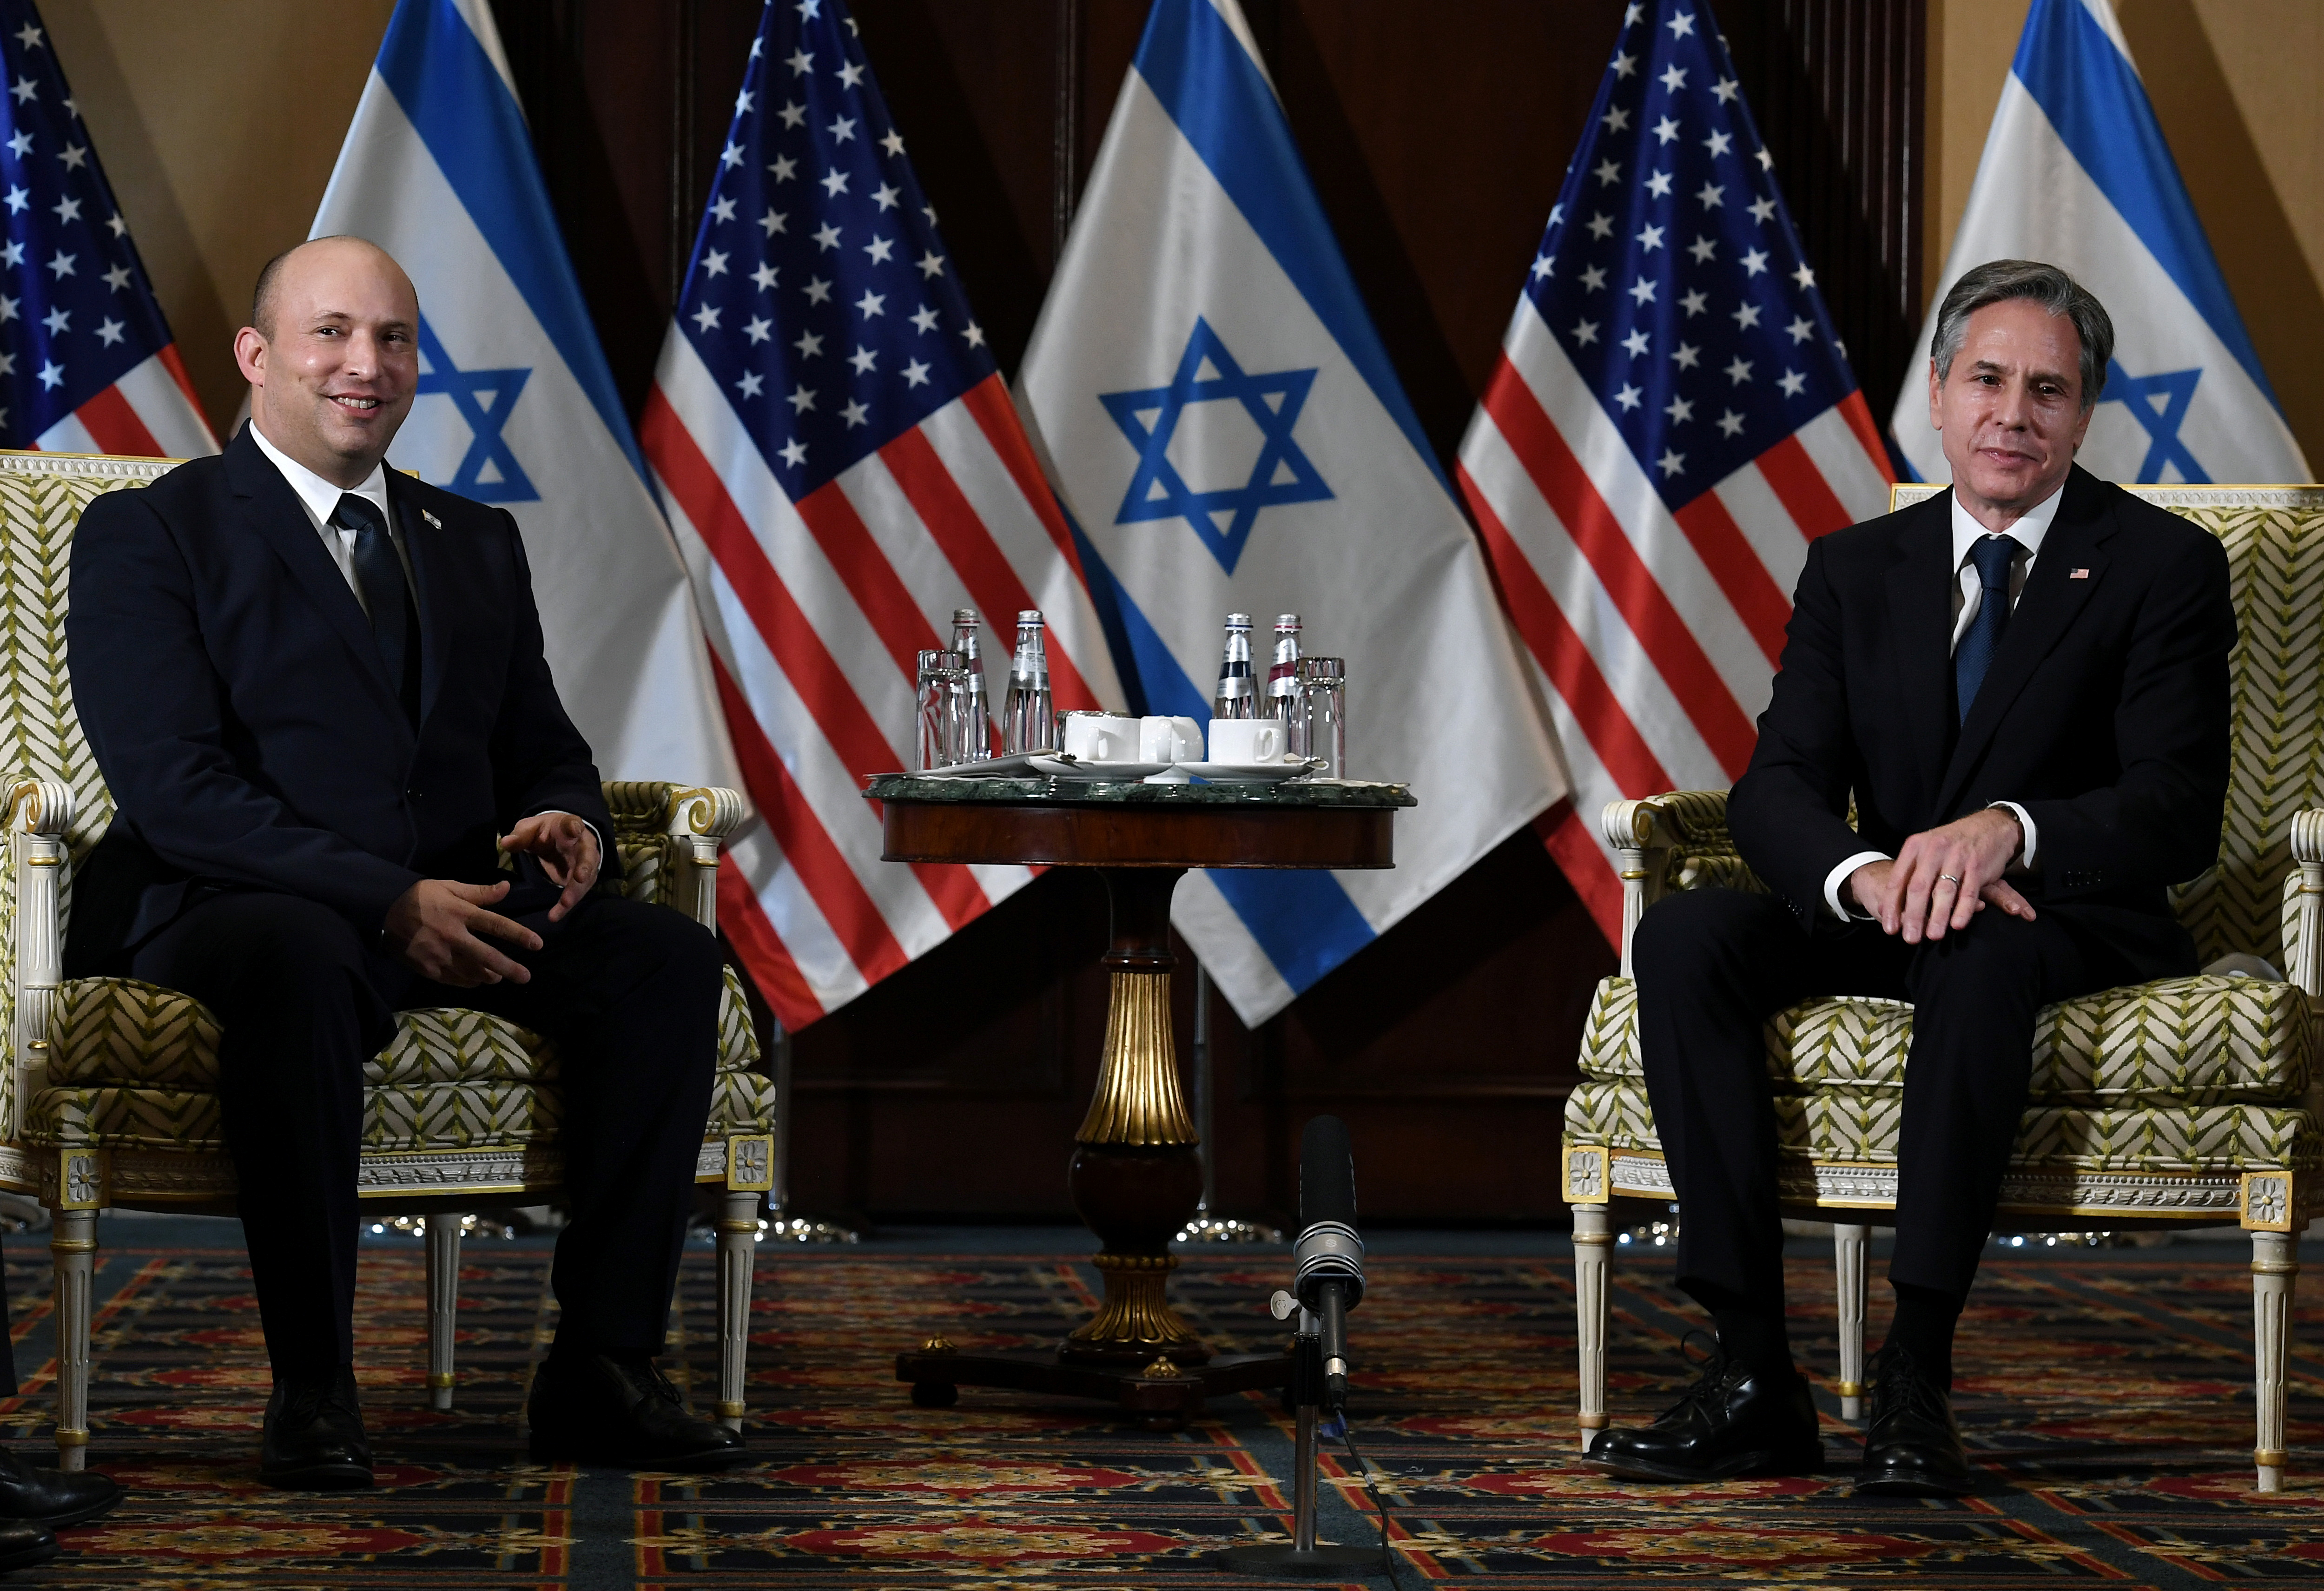 U.S. Secretary of State Antony Blinken meets with Israeli Prime Minister Naftali Bennett at the Willard Hotel in Washington, D.C., U.S. August 25, 2021. Olivier Douliery/Pool via REUTERS